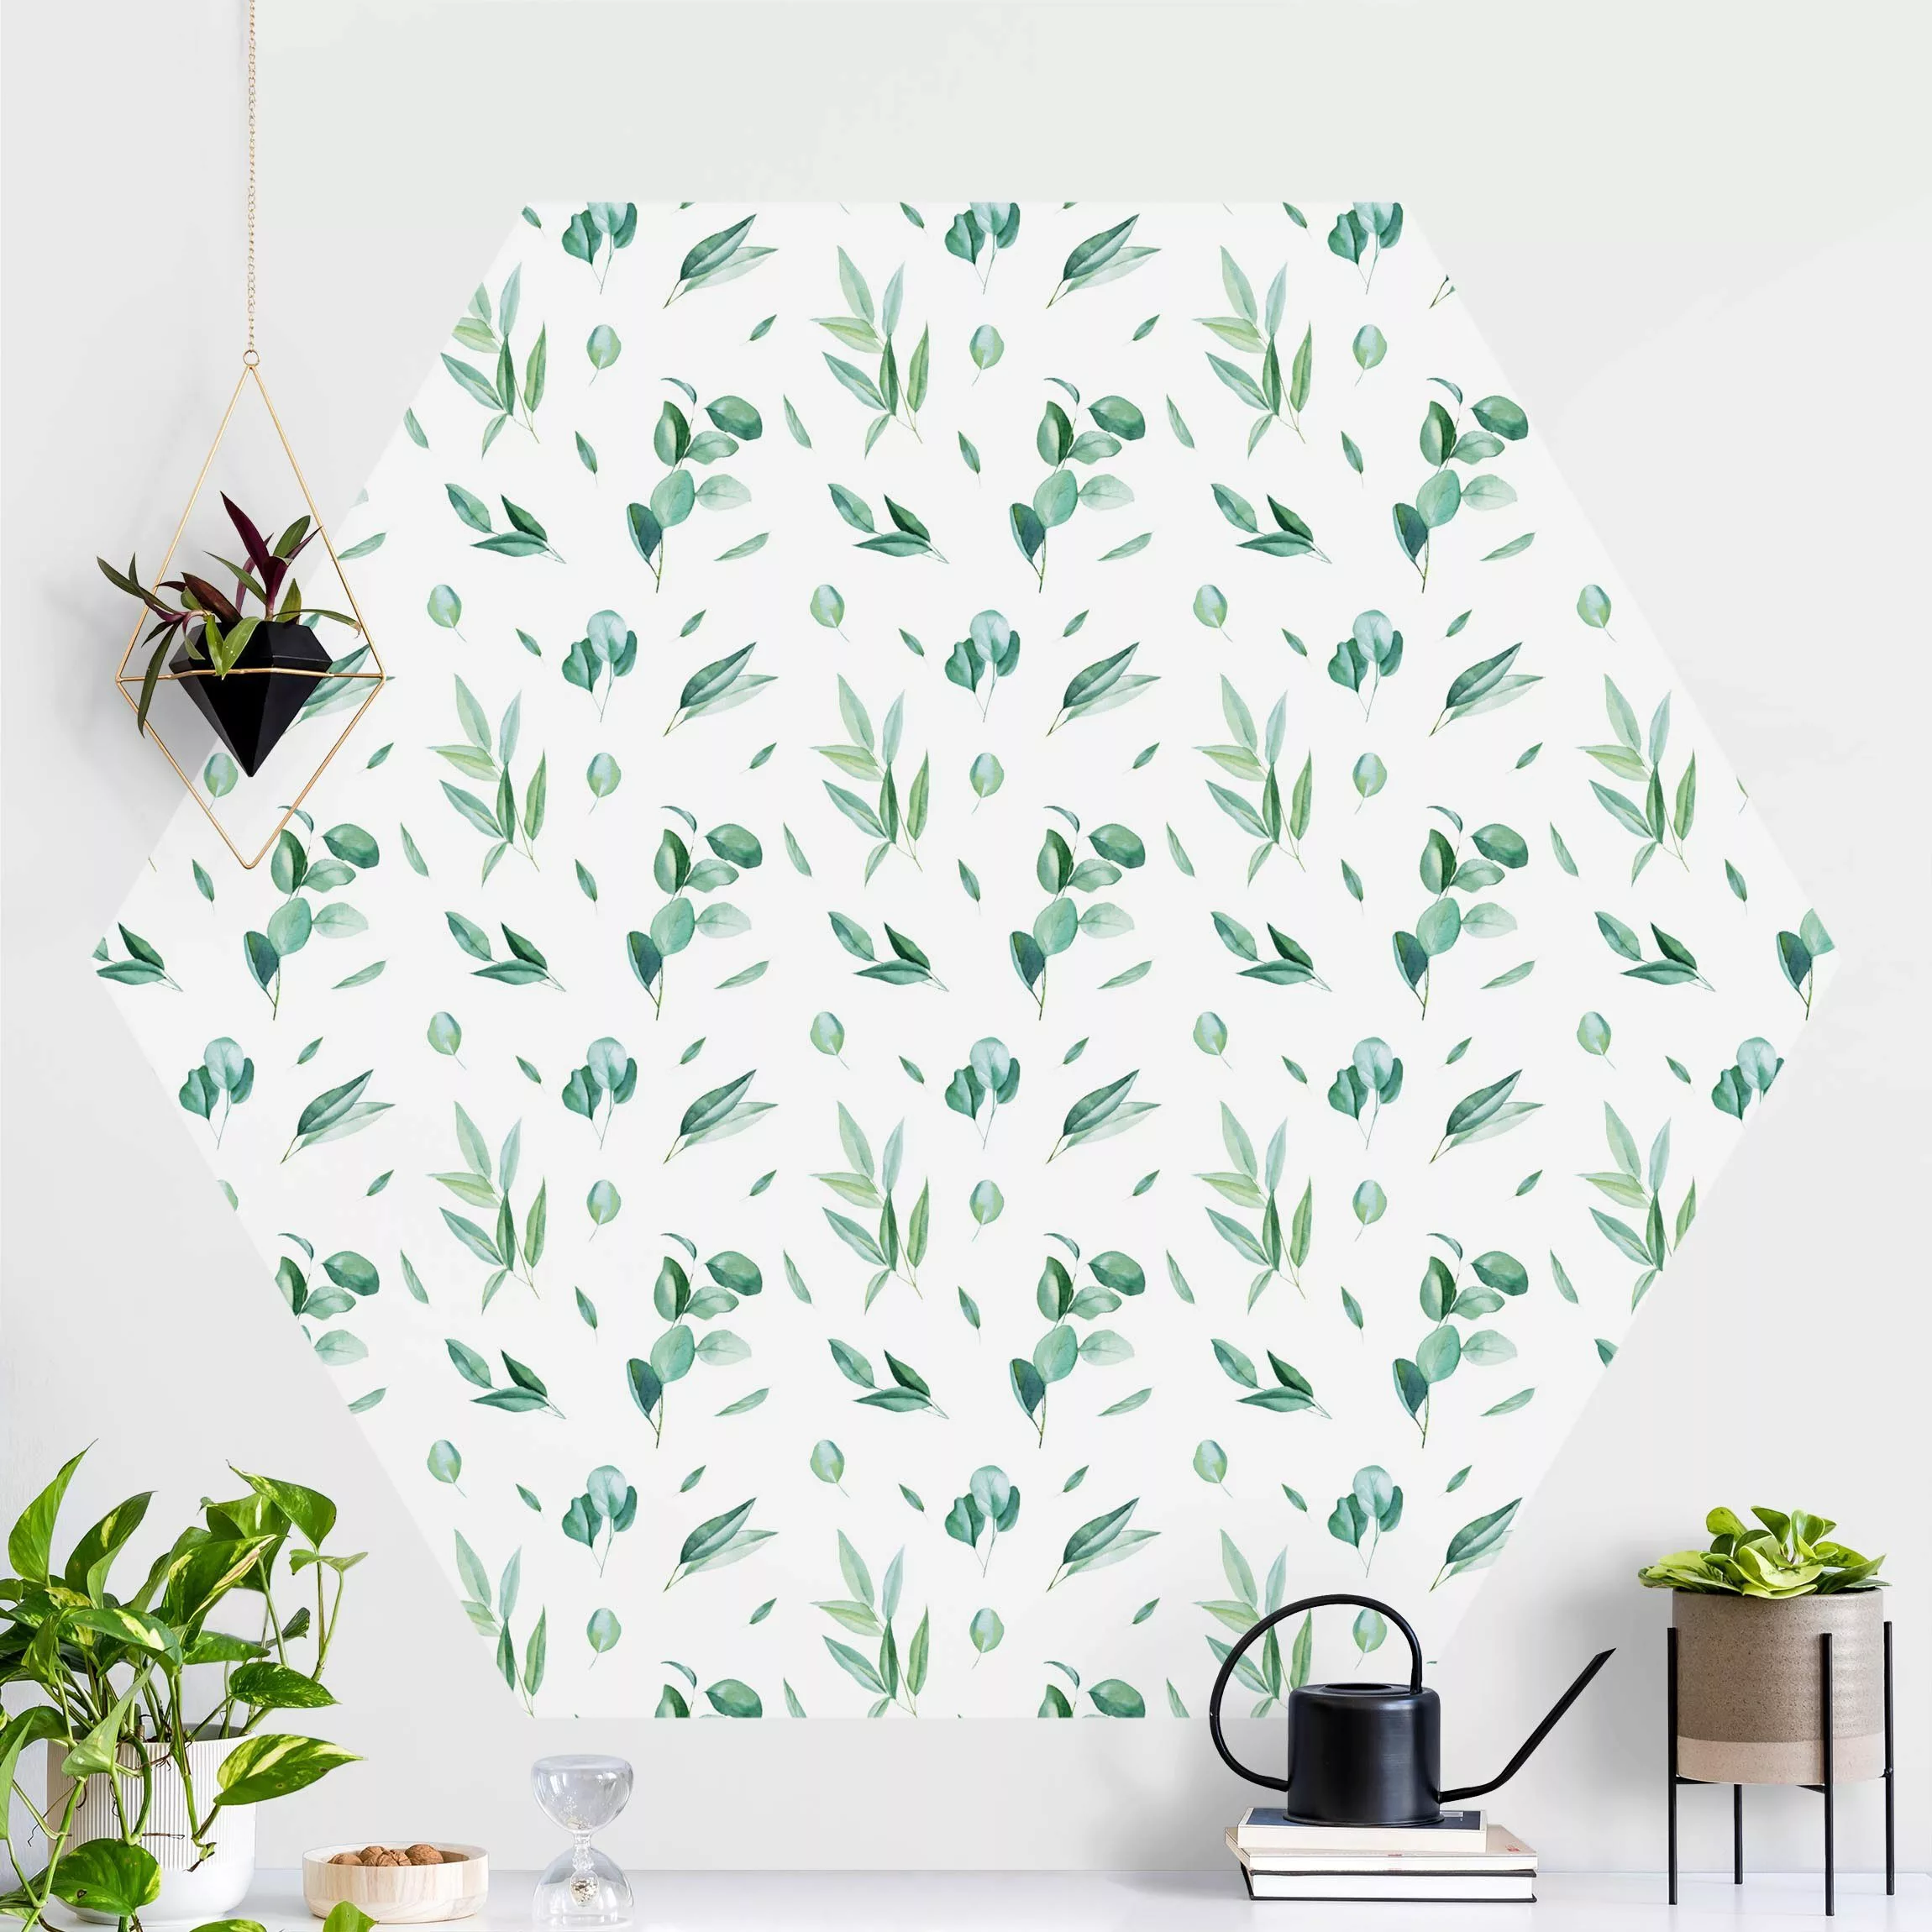 Hexagon Mustertapete selbstklebend Aquarell Muster Blätter und Eukalyptus günstig online kaufen